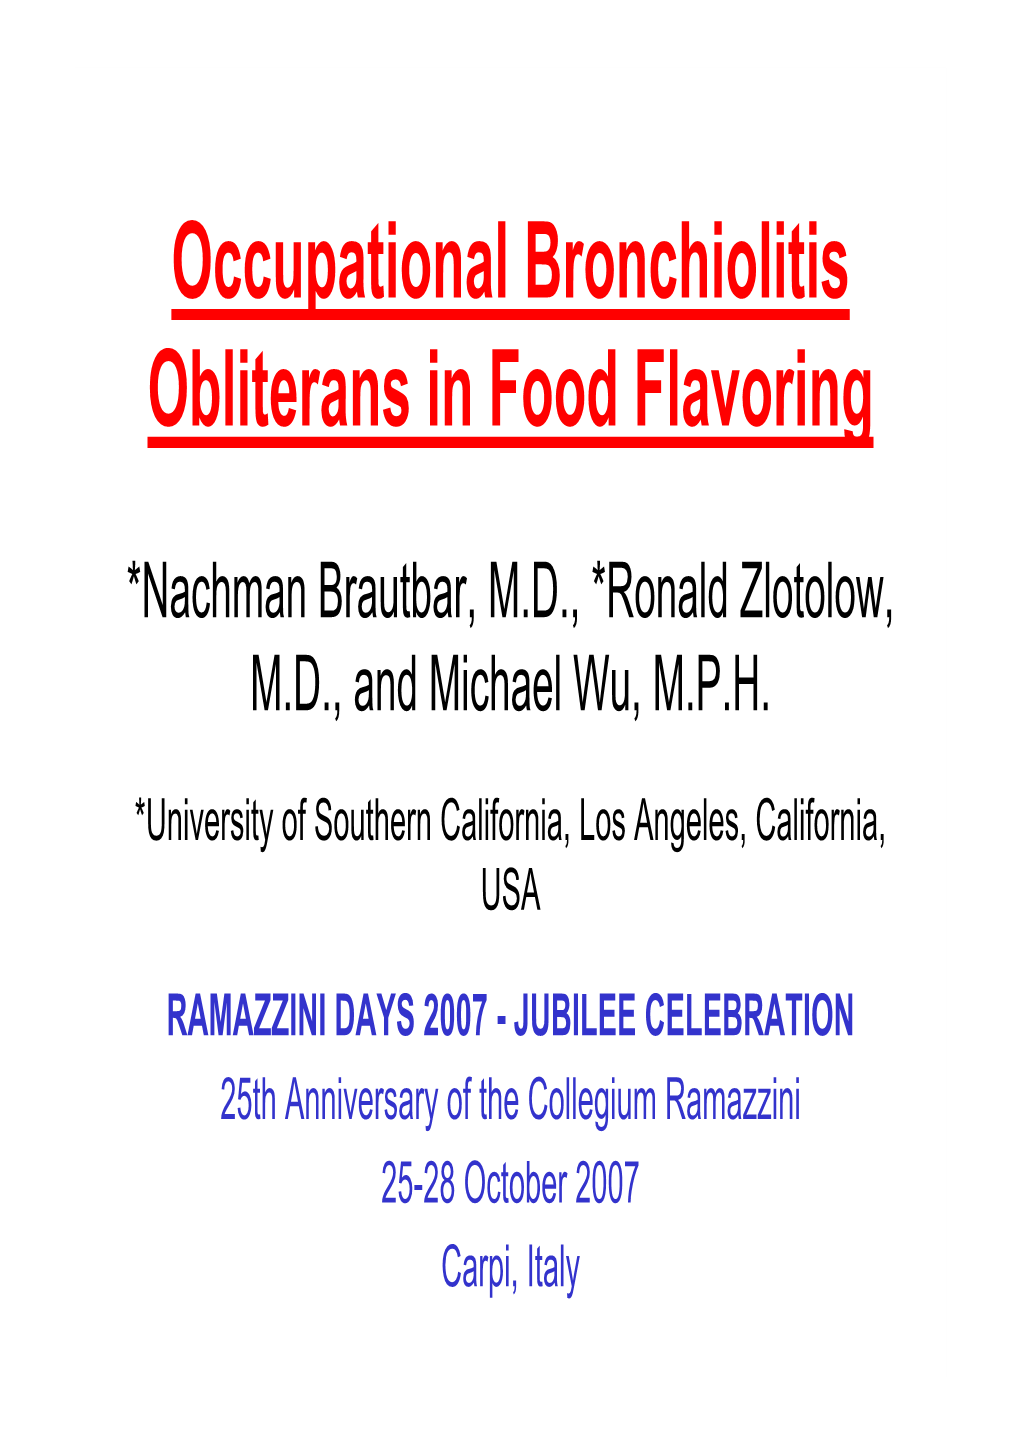 Occupational Bronchiolitis Obliterans in Food Flavoring